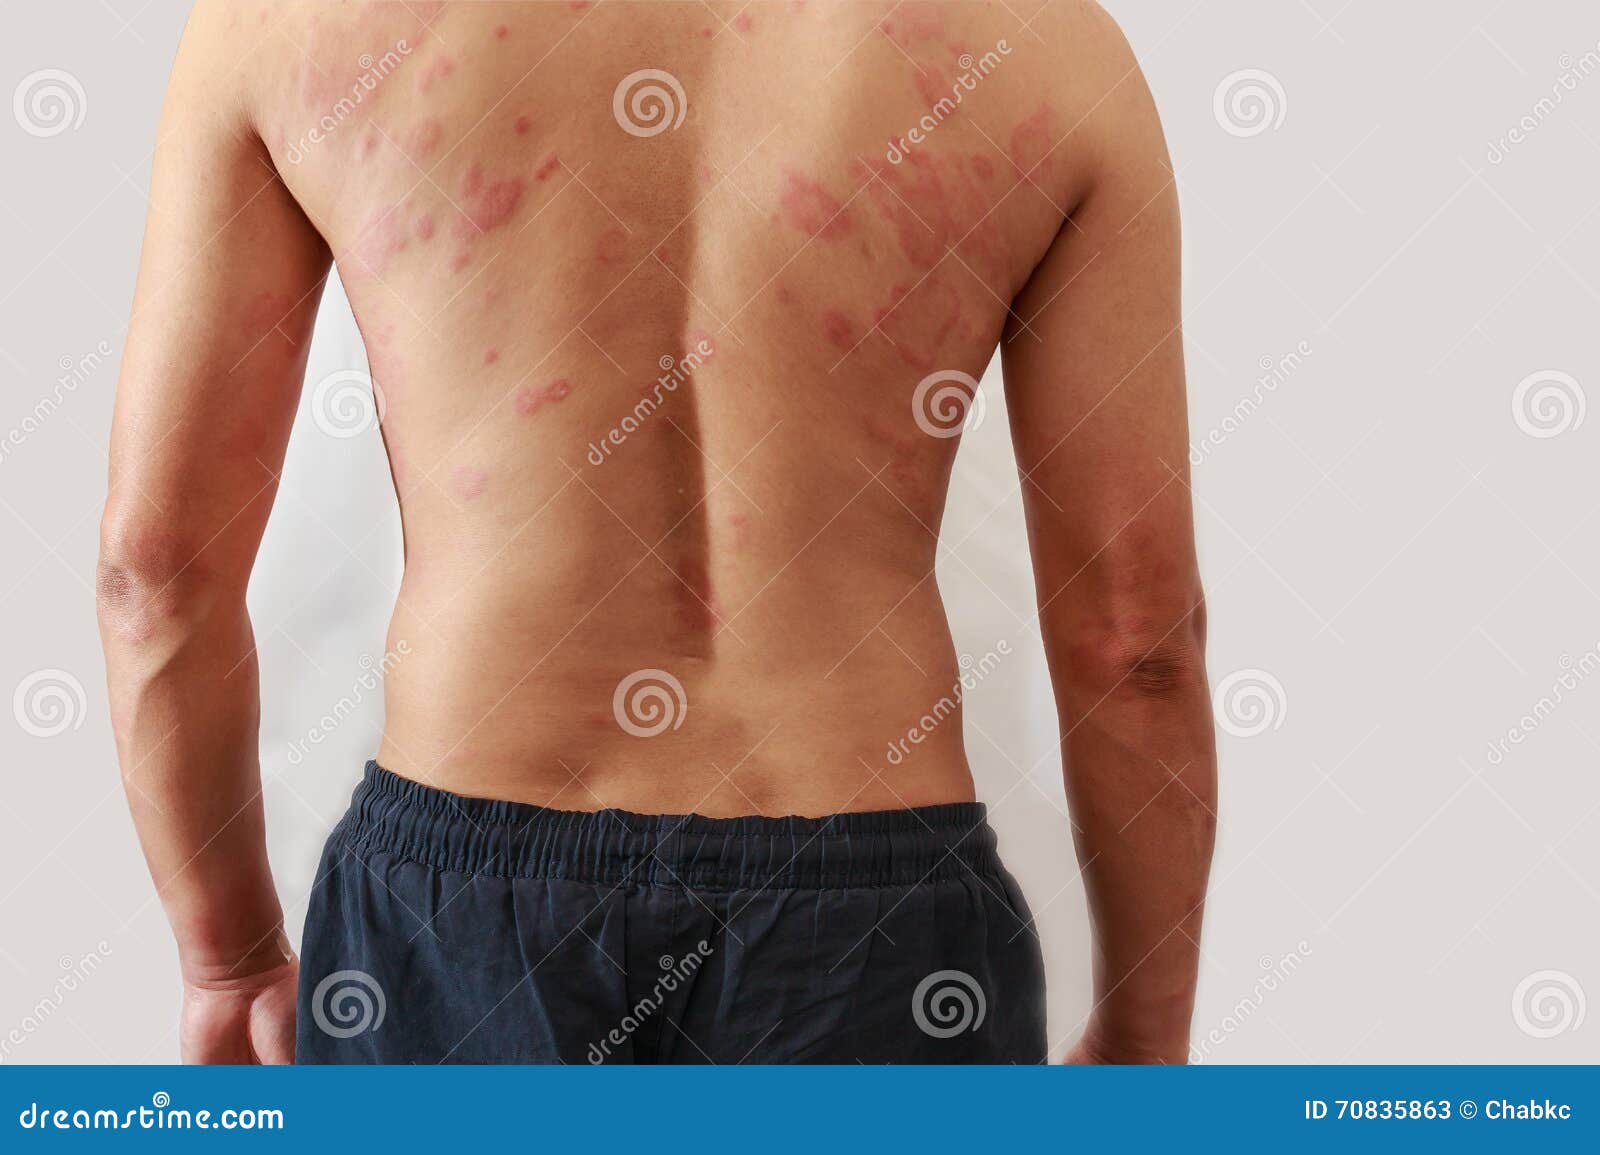 dermatitis problem of rash ,allergy rash